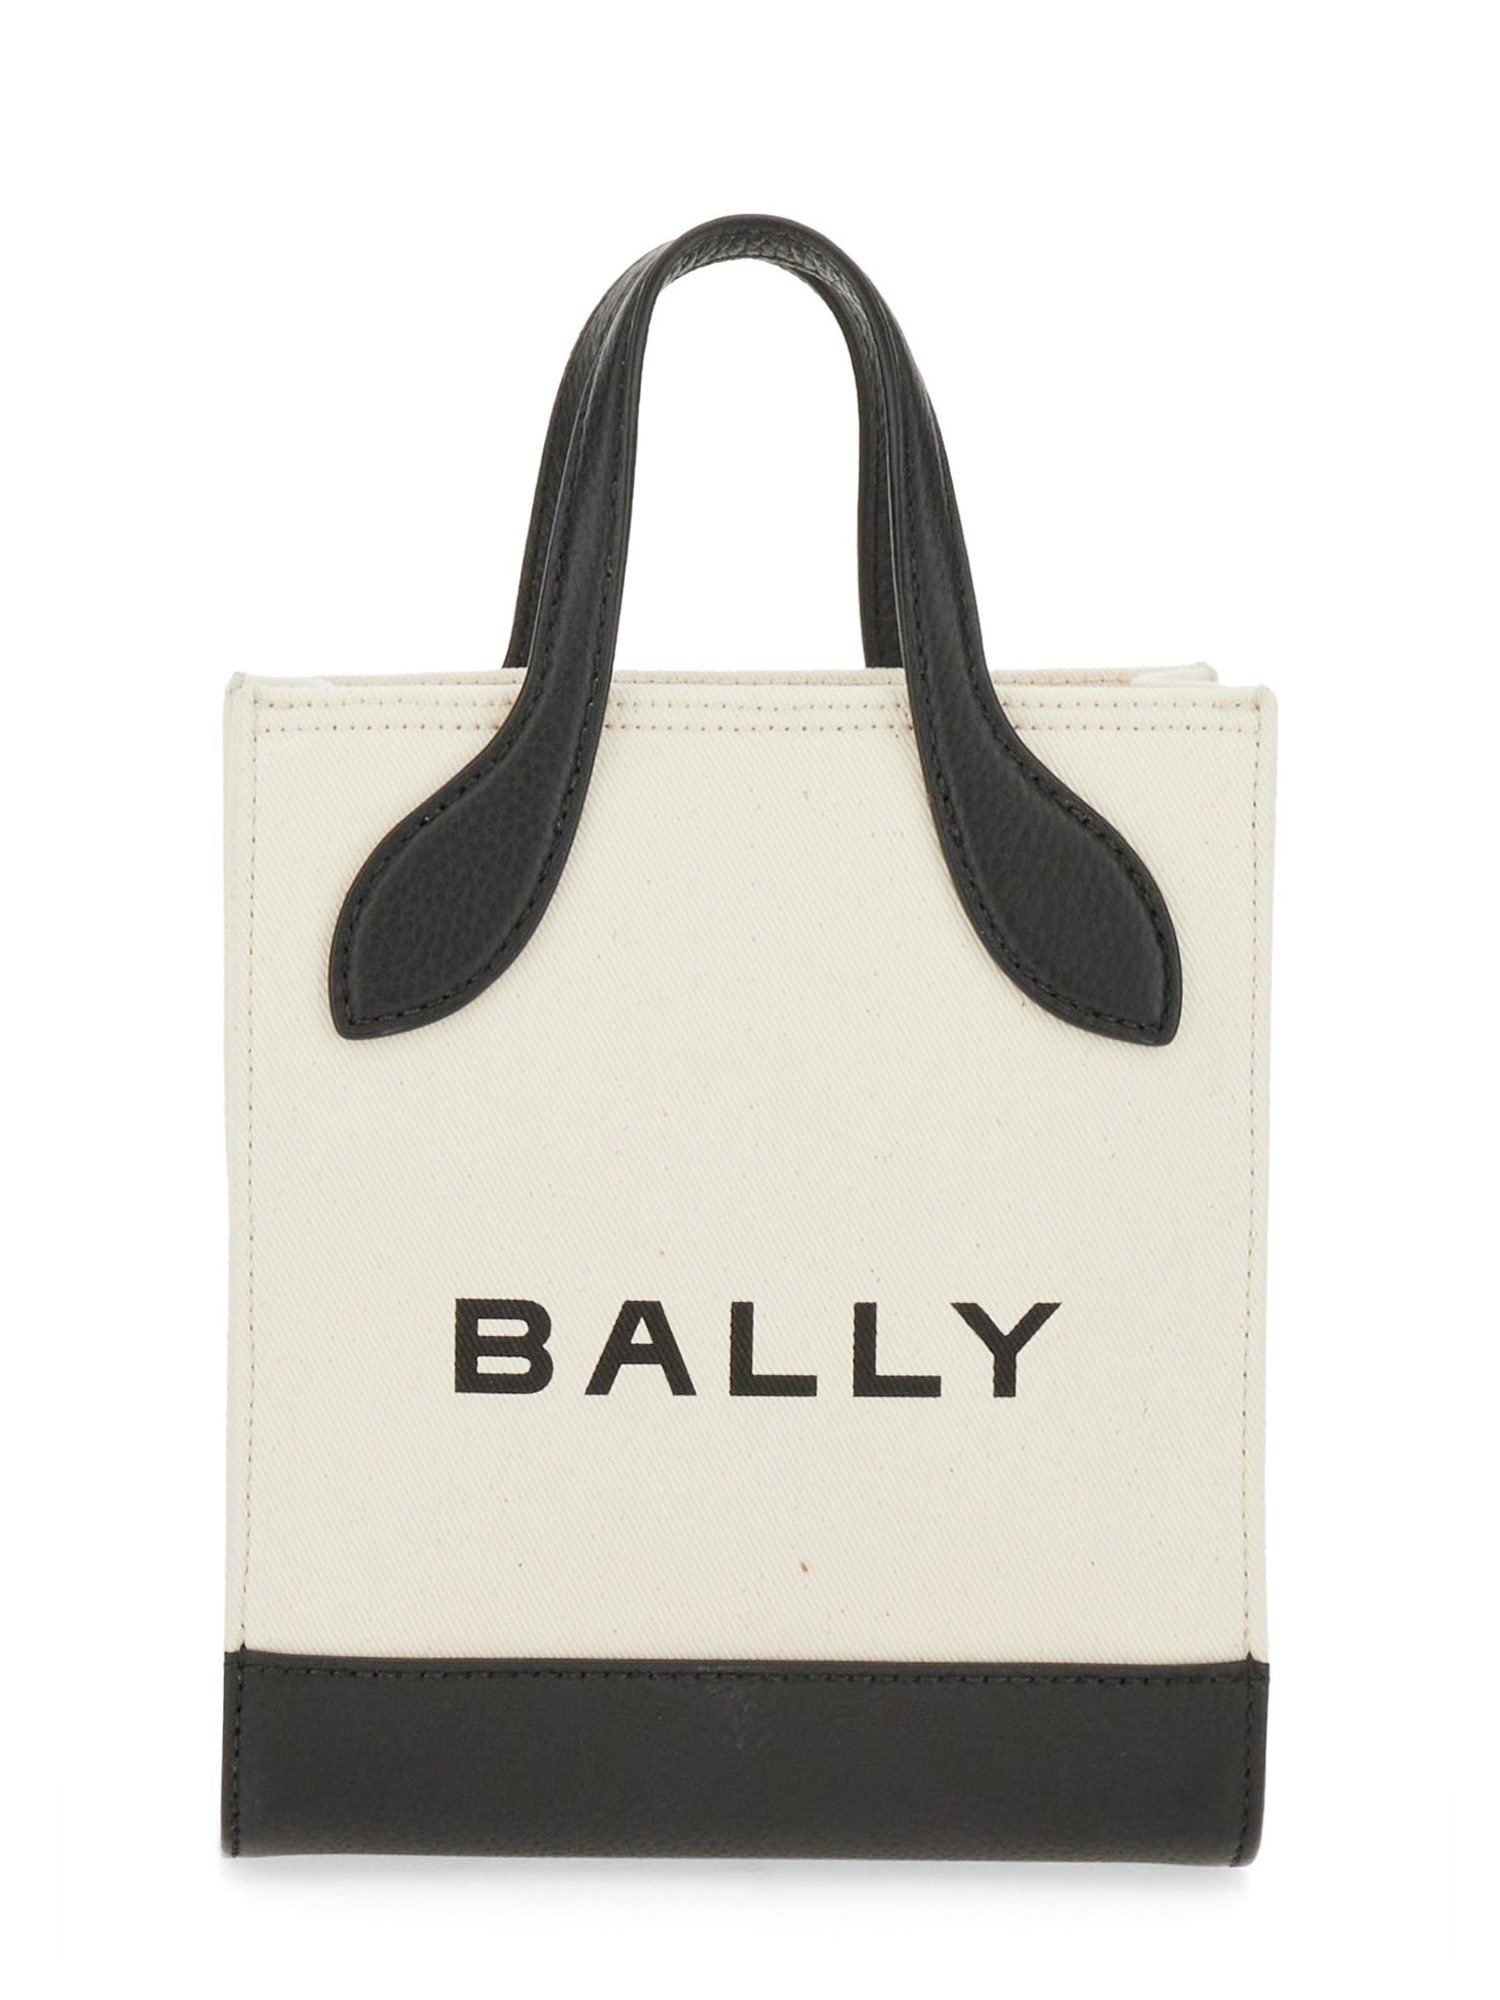 bally bag with logo